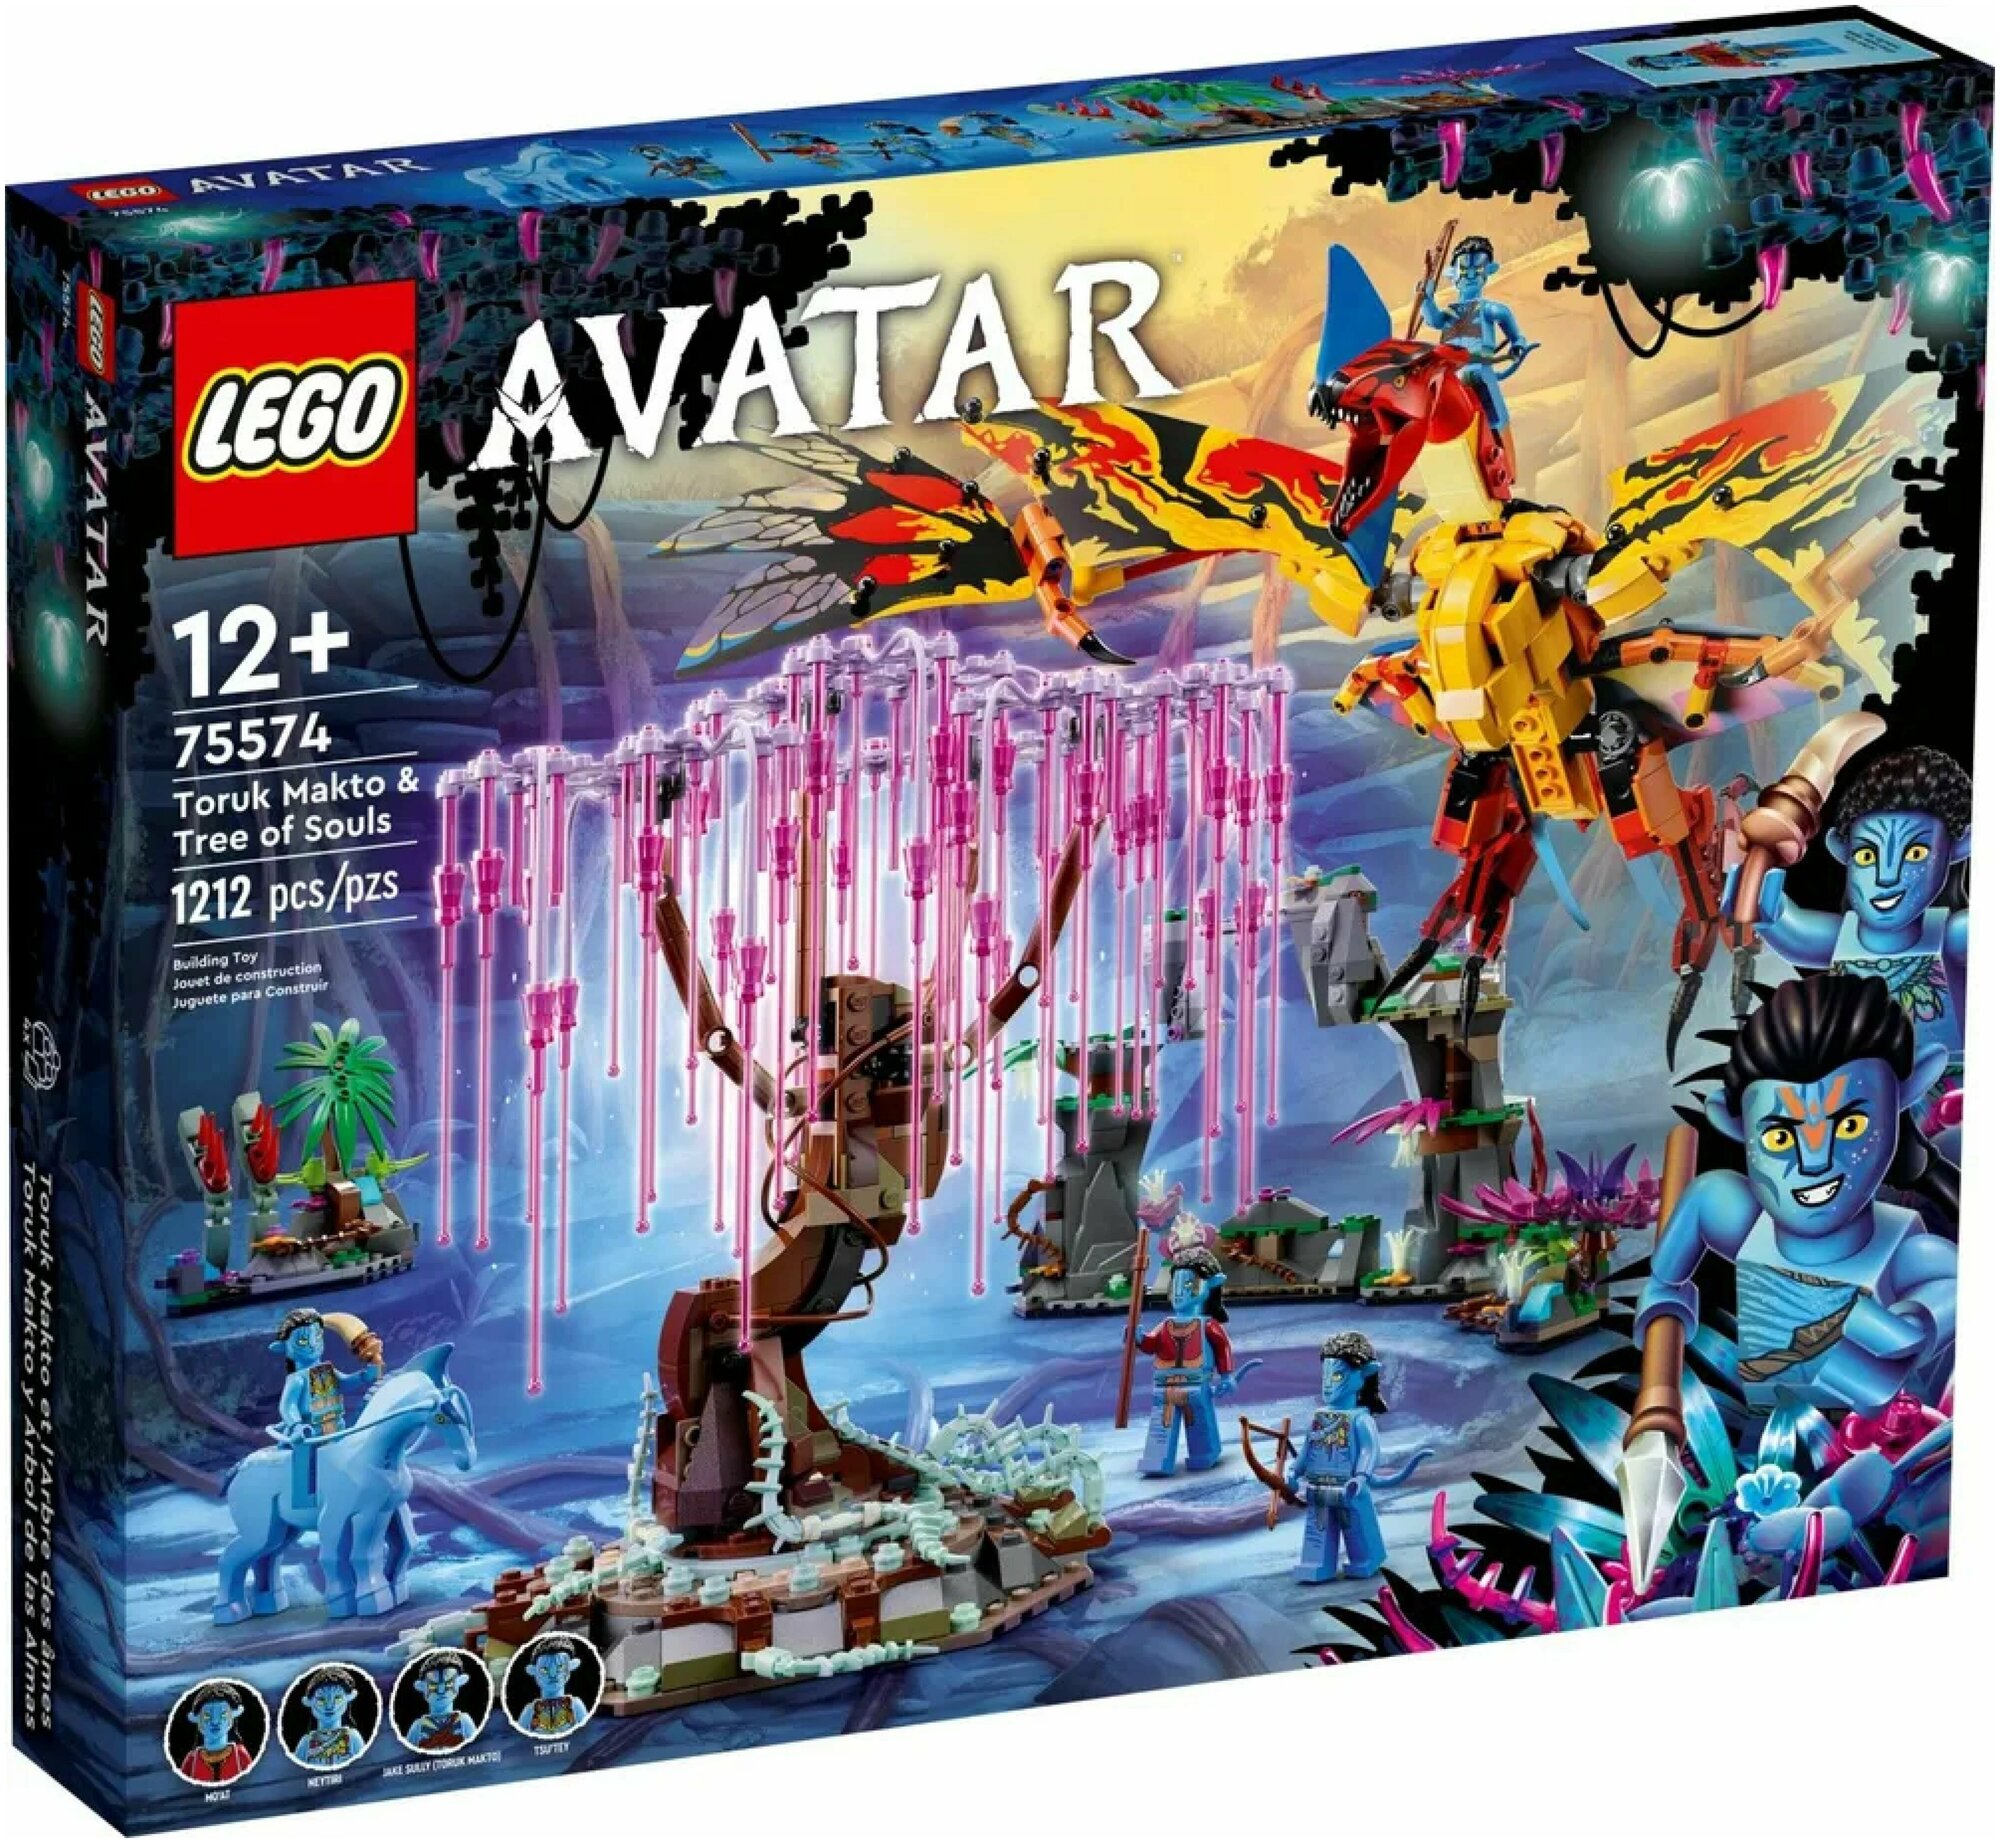 LEGO Avatar 75574, Toruk Makto & Tree of Souls 75574